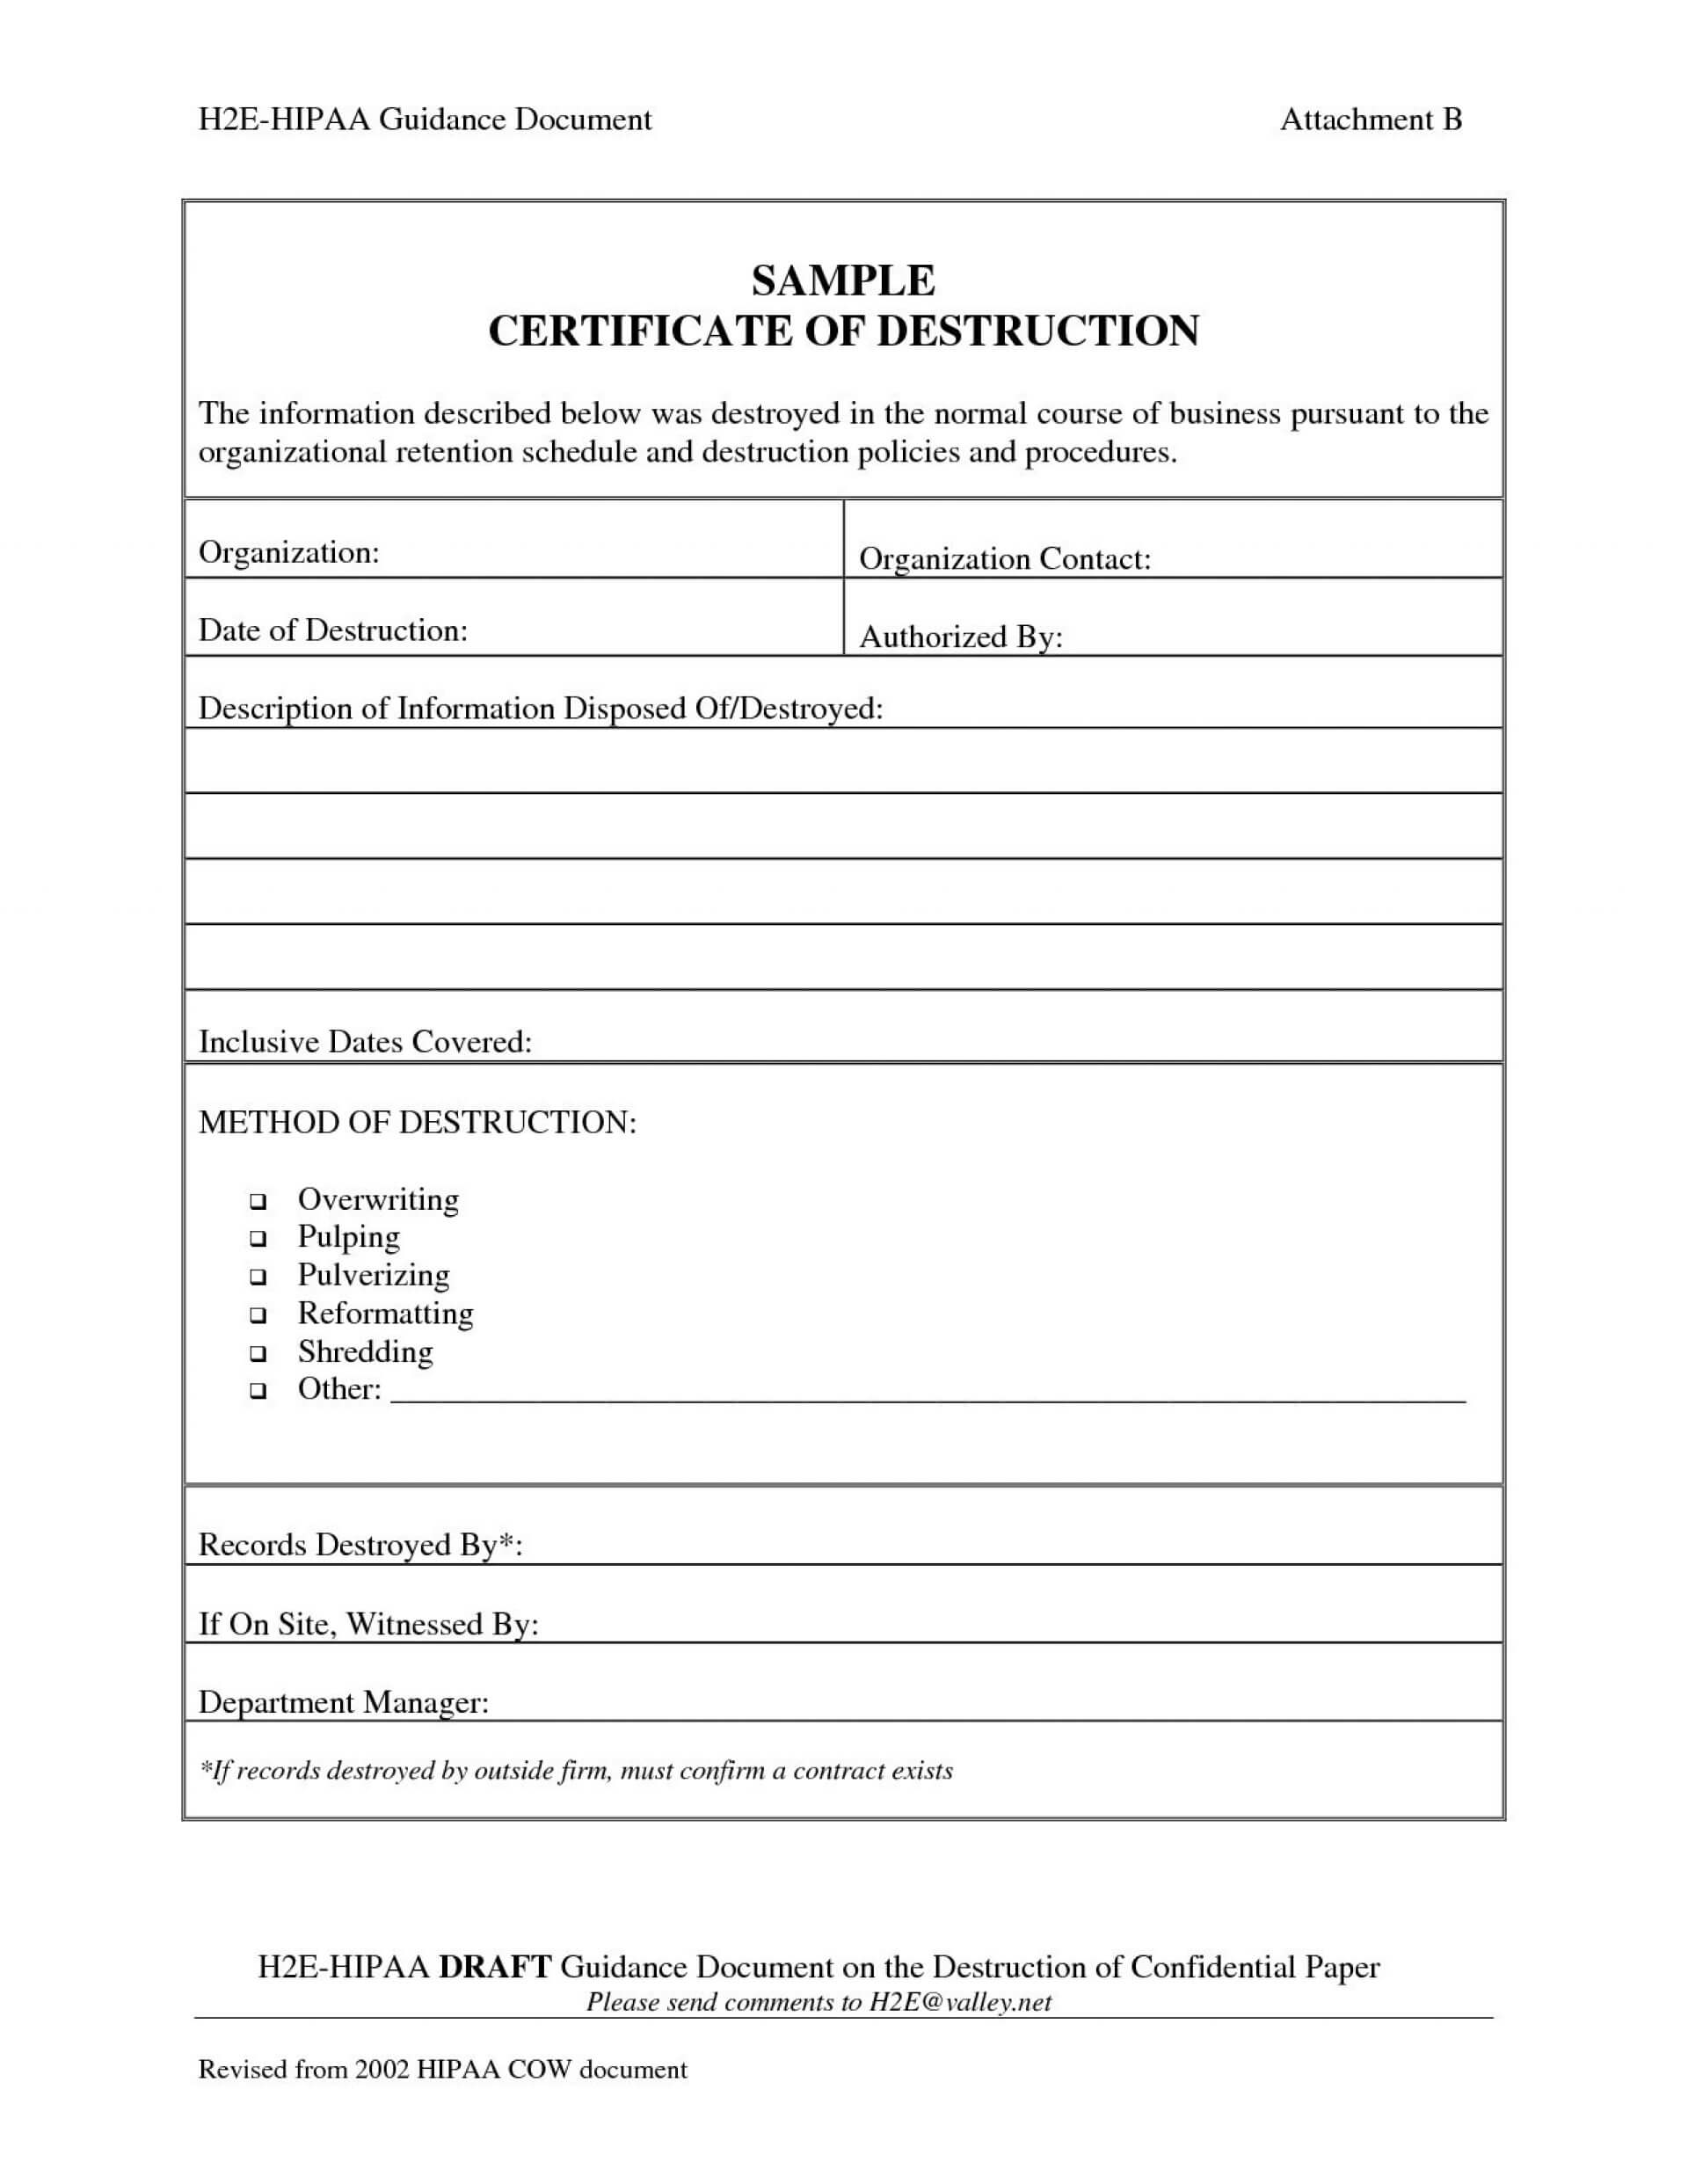 033 Certificate Of Destruction Template Hard Drive Together Intended For Hard Drive Destruction Certificate Template